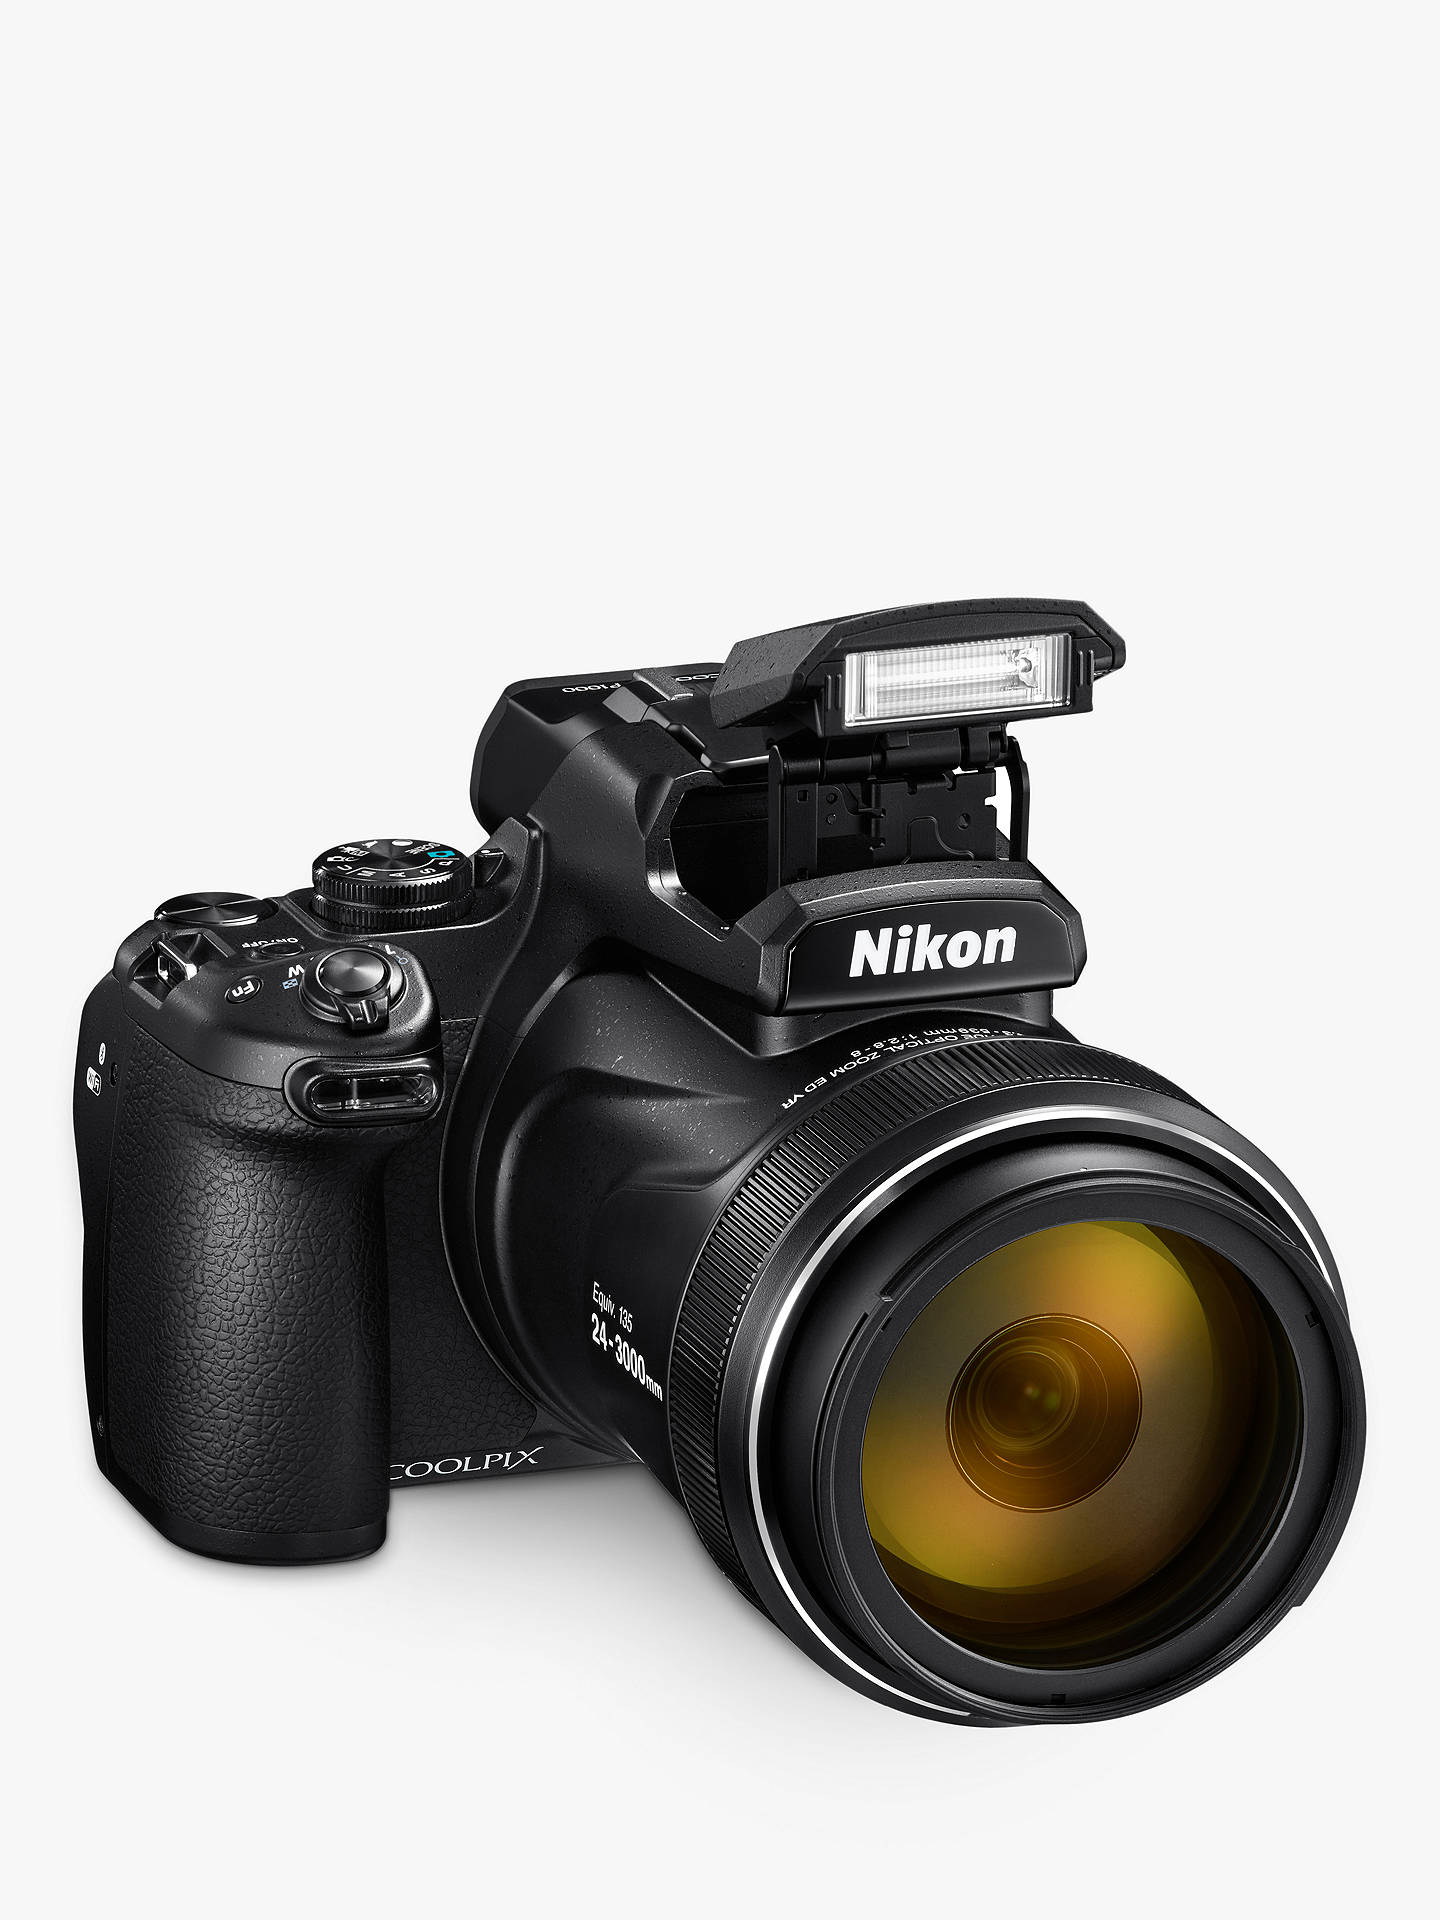 Nikon camera with bluetooth and wifi